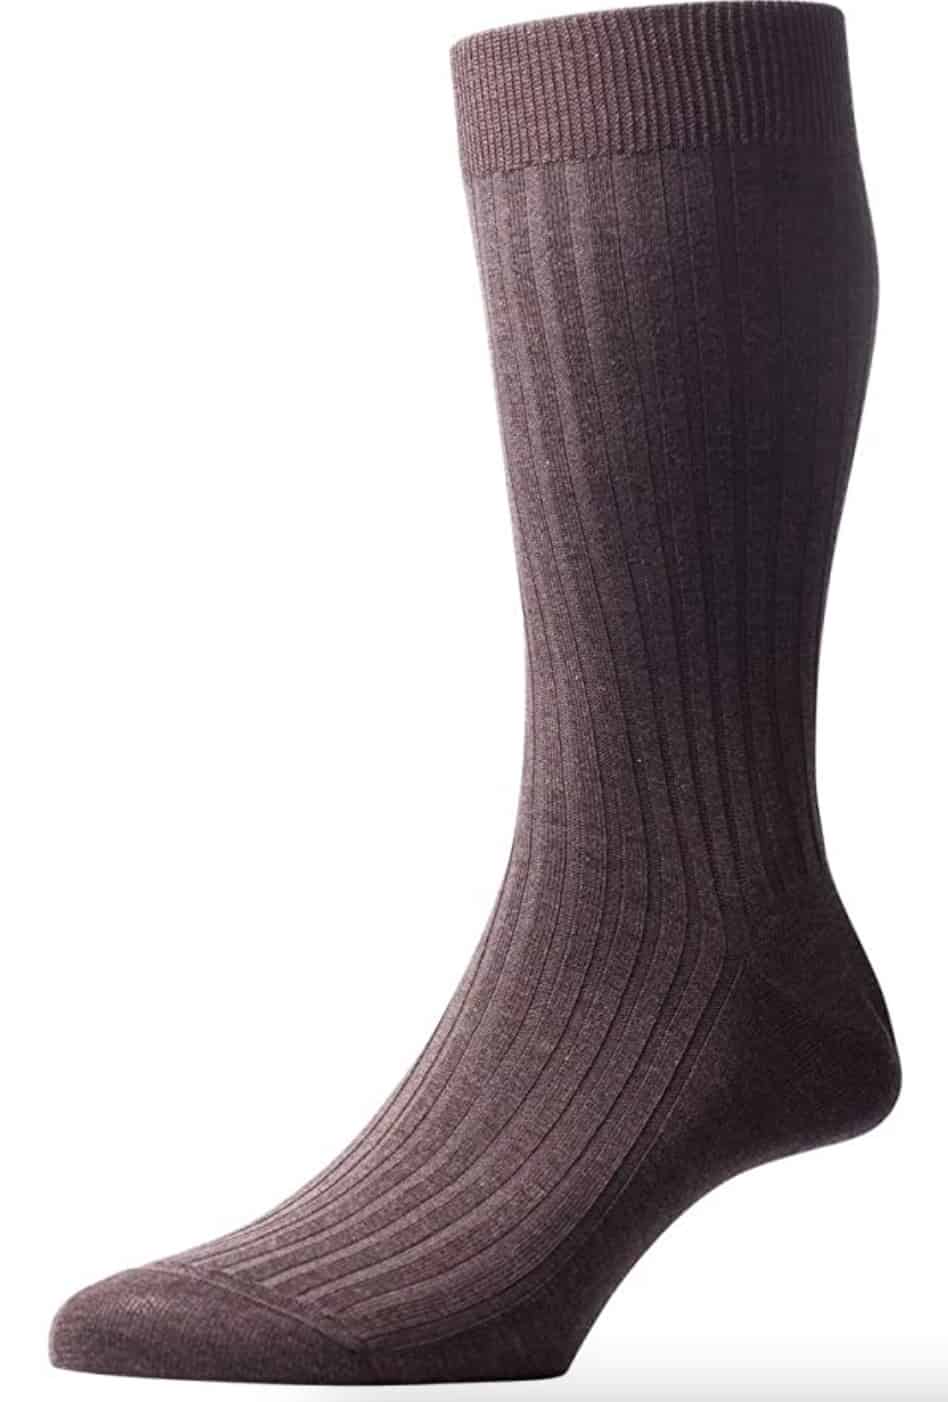 Panterella Danvers Rib Cotton Dress Socks